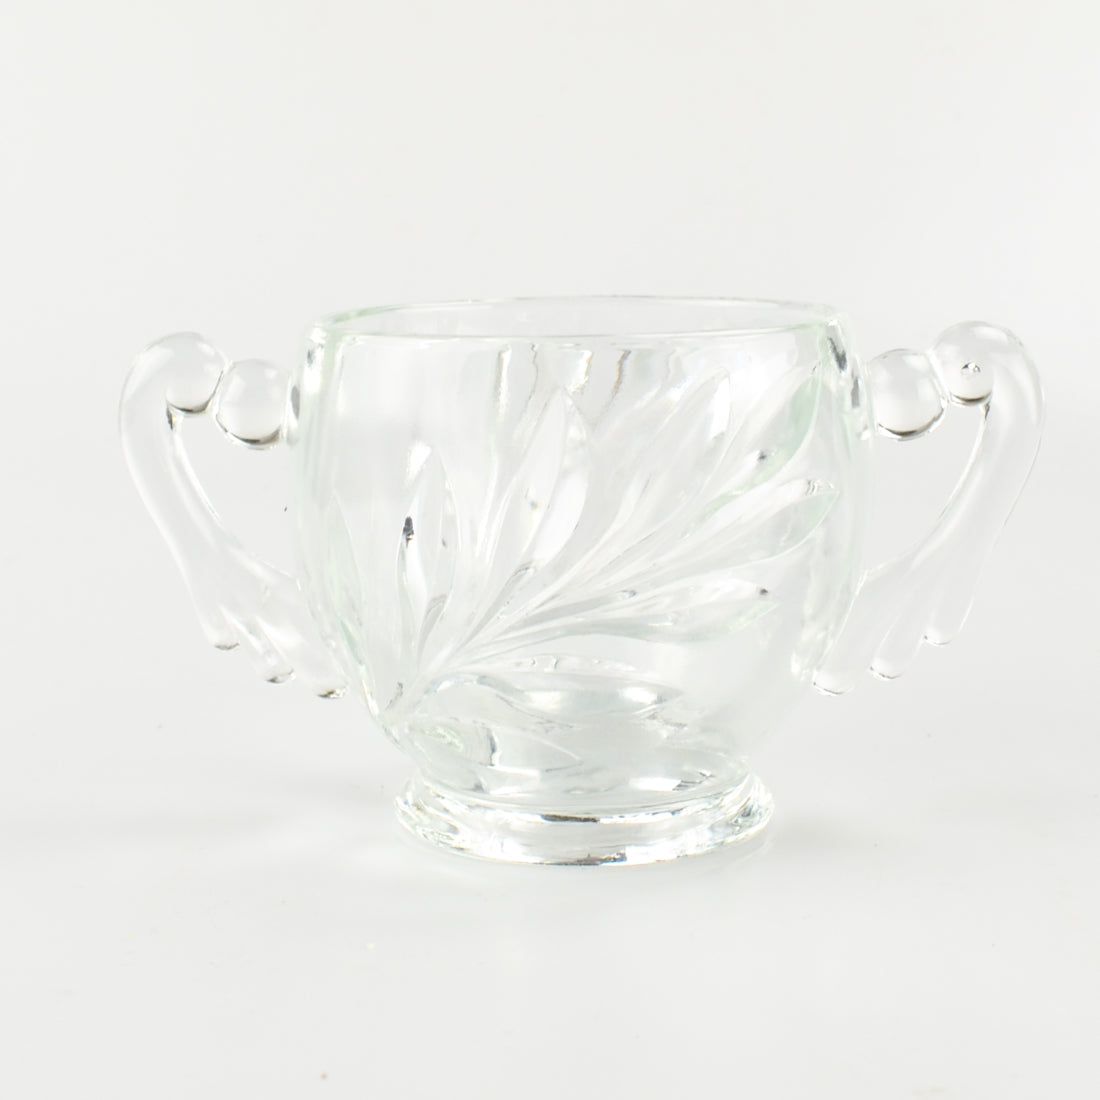 Vintage Cut Glass Sugar Bowl - Clear - Double Handle - Open